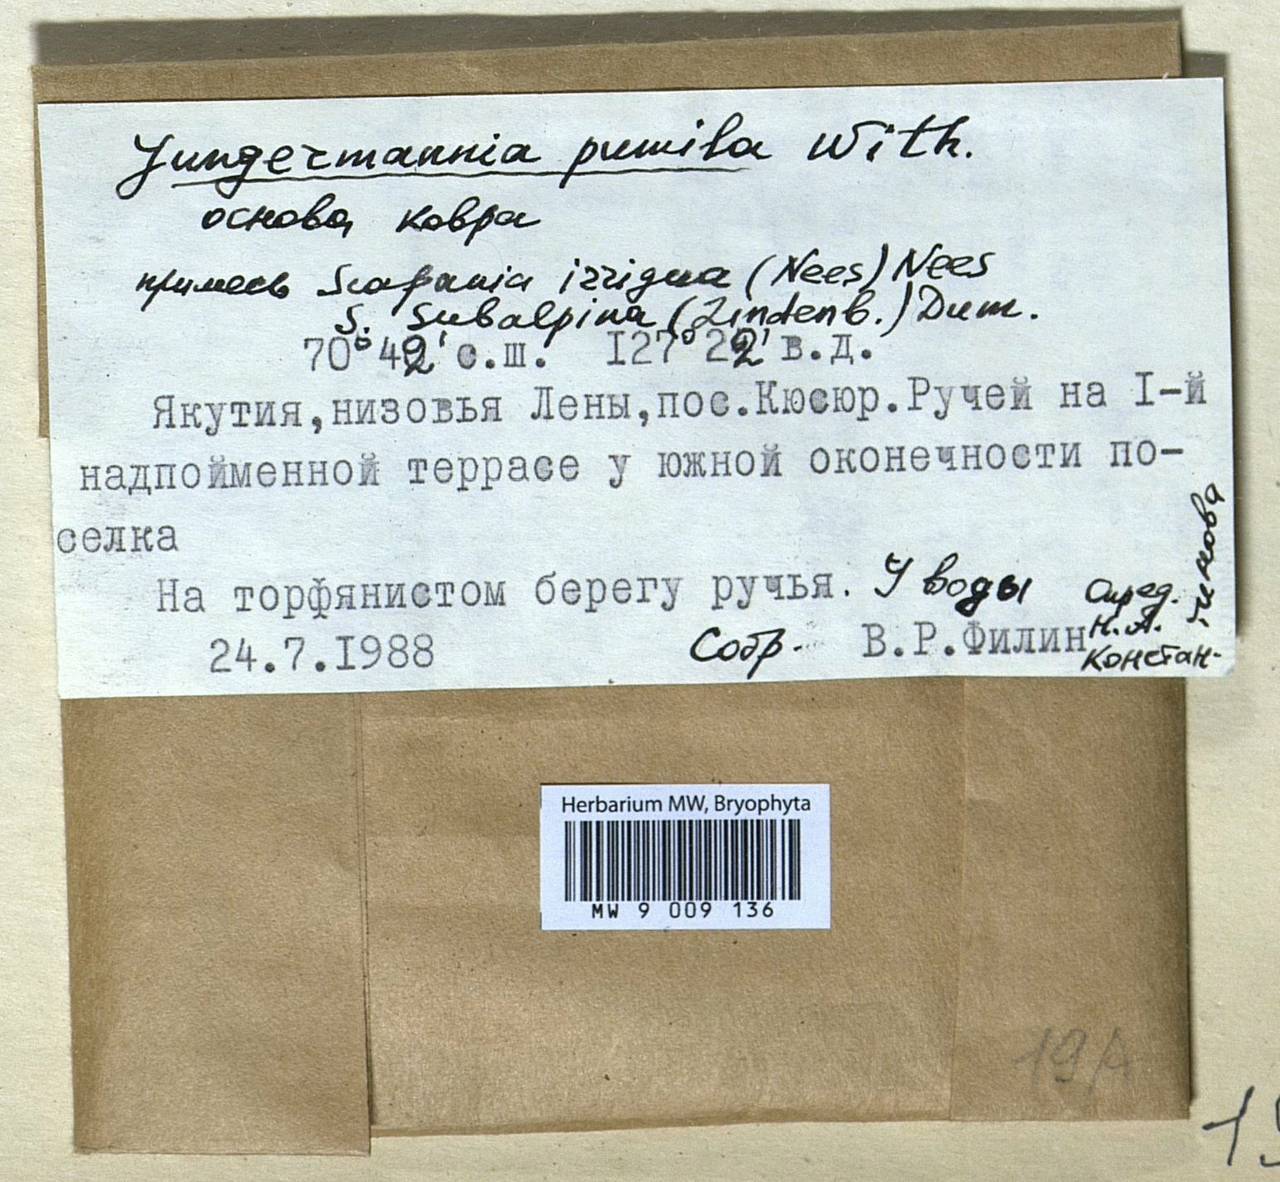 Jungermannia pumila With., Bryophytes, Bryophytes - Yakutia (B19) (Russia)